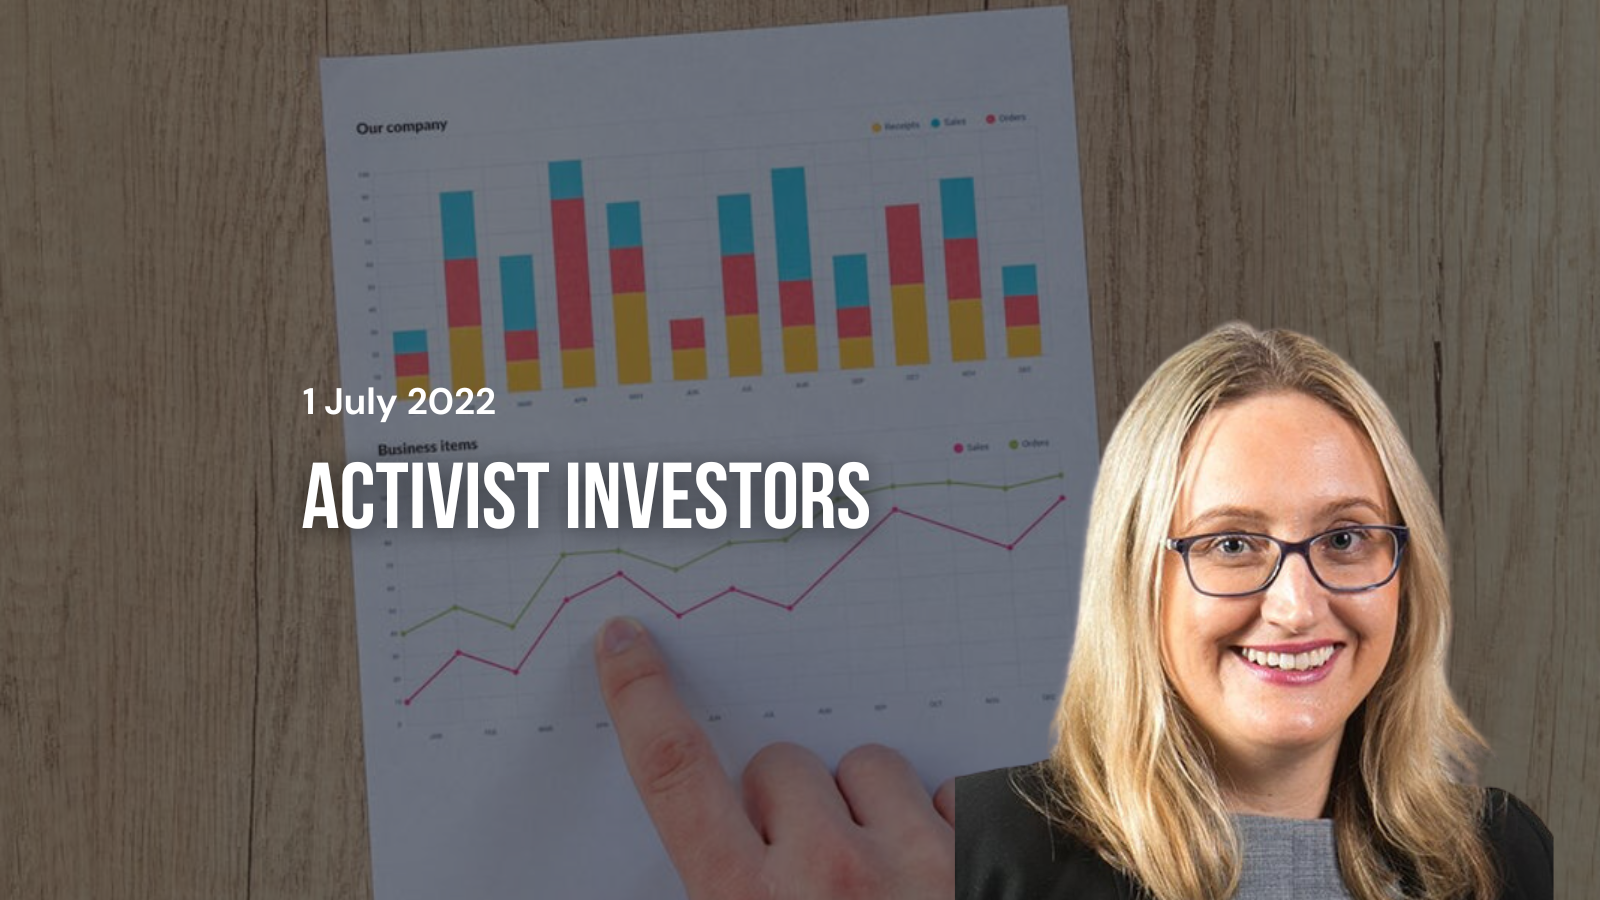 Activist investors